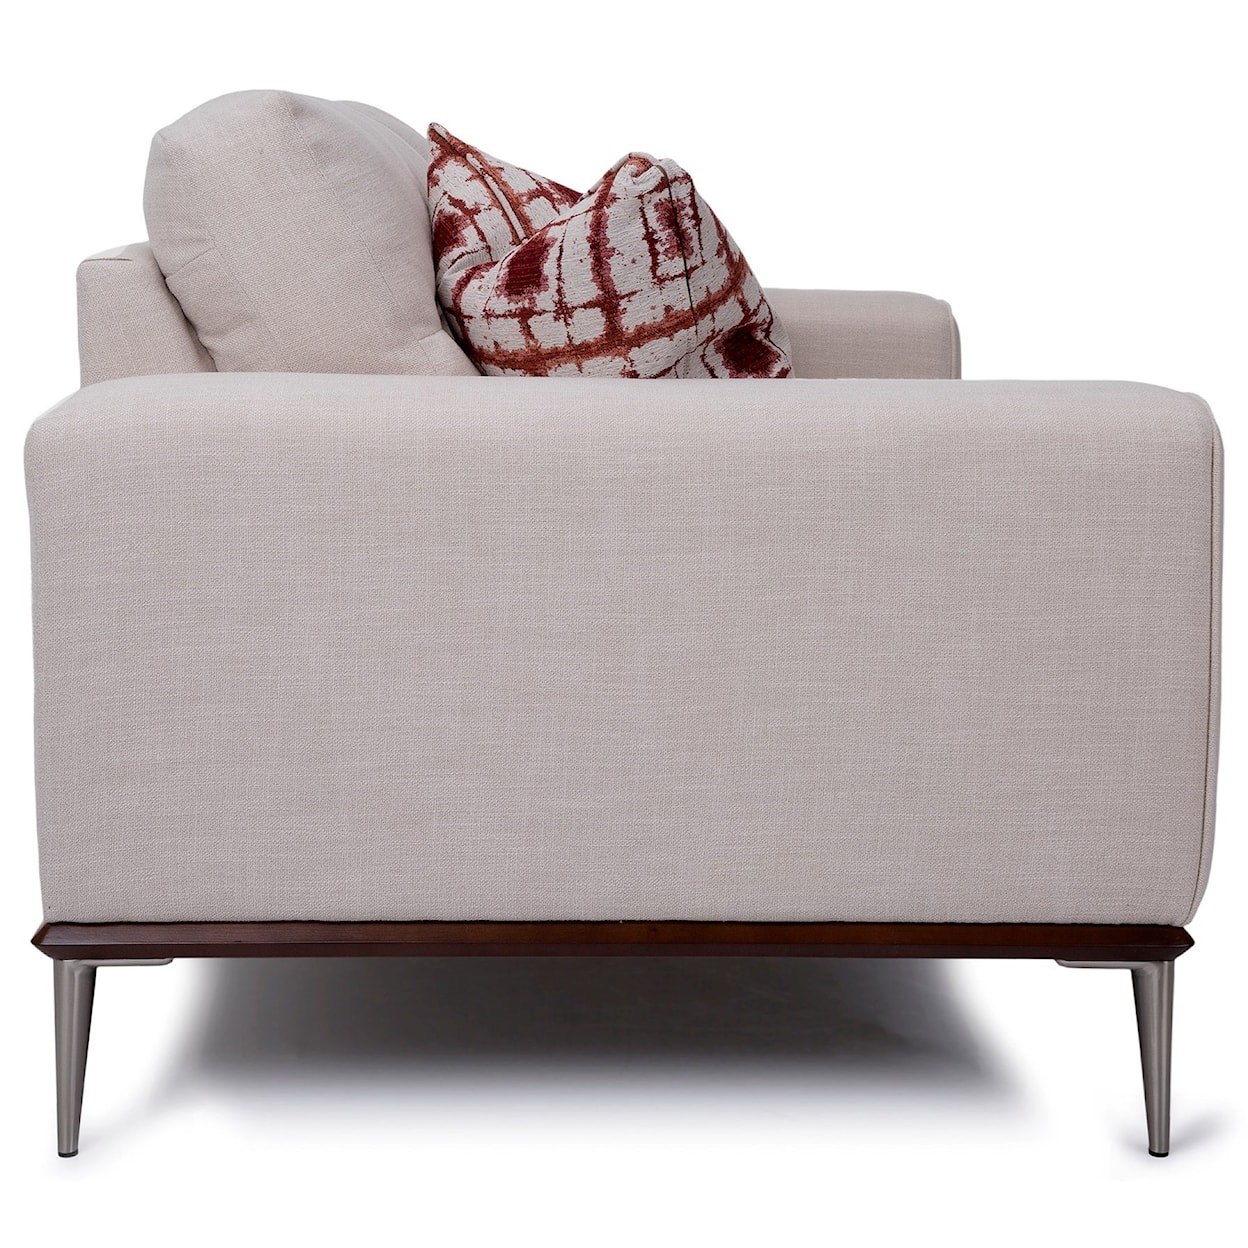 Decor Rest 2030 2030 01 Mid Century Modern 2 Seat Sofa With Metal Legs